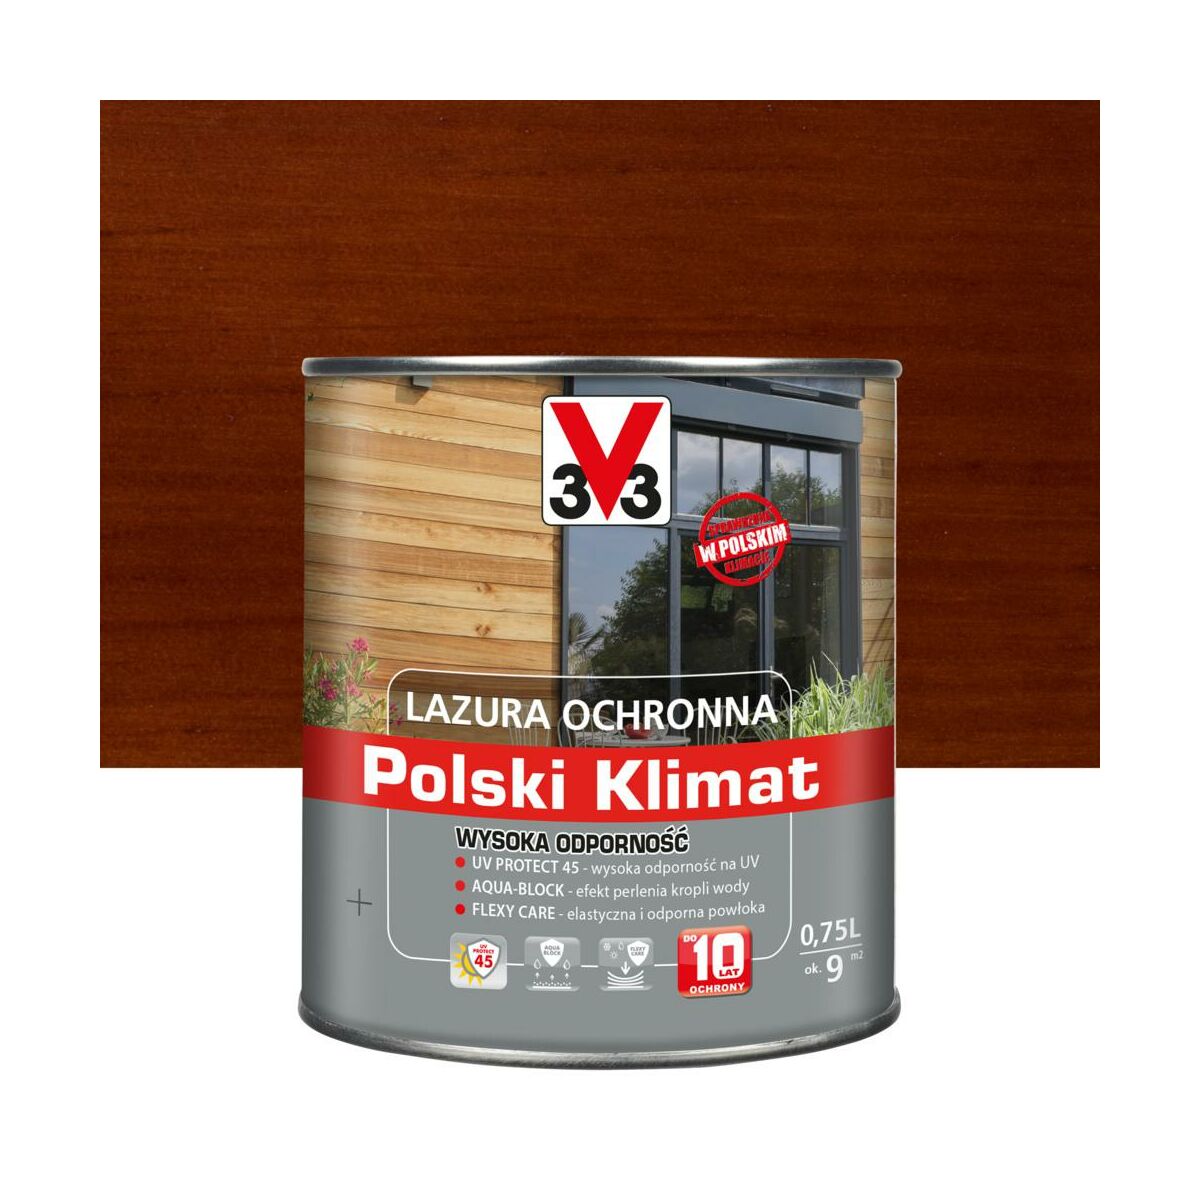 Lazura do drewna Polski klimat 0.75 l Sosna oregońska V33